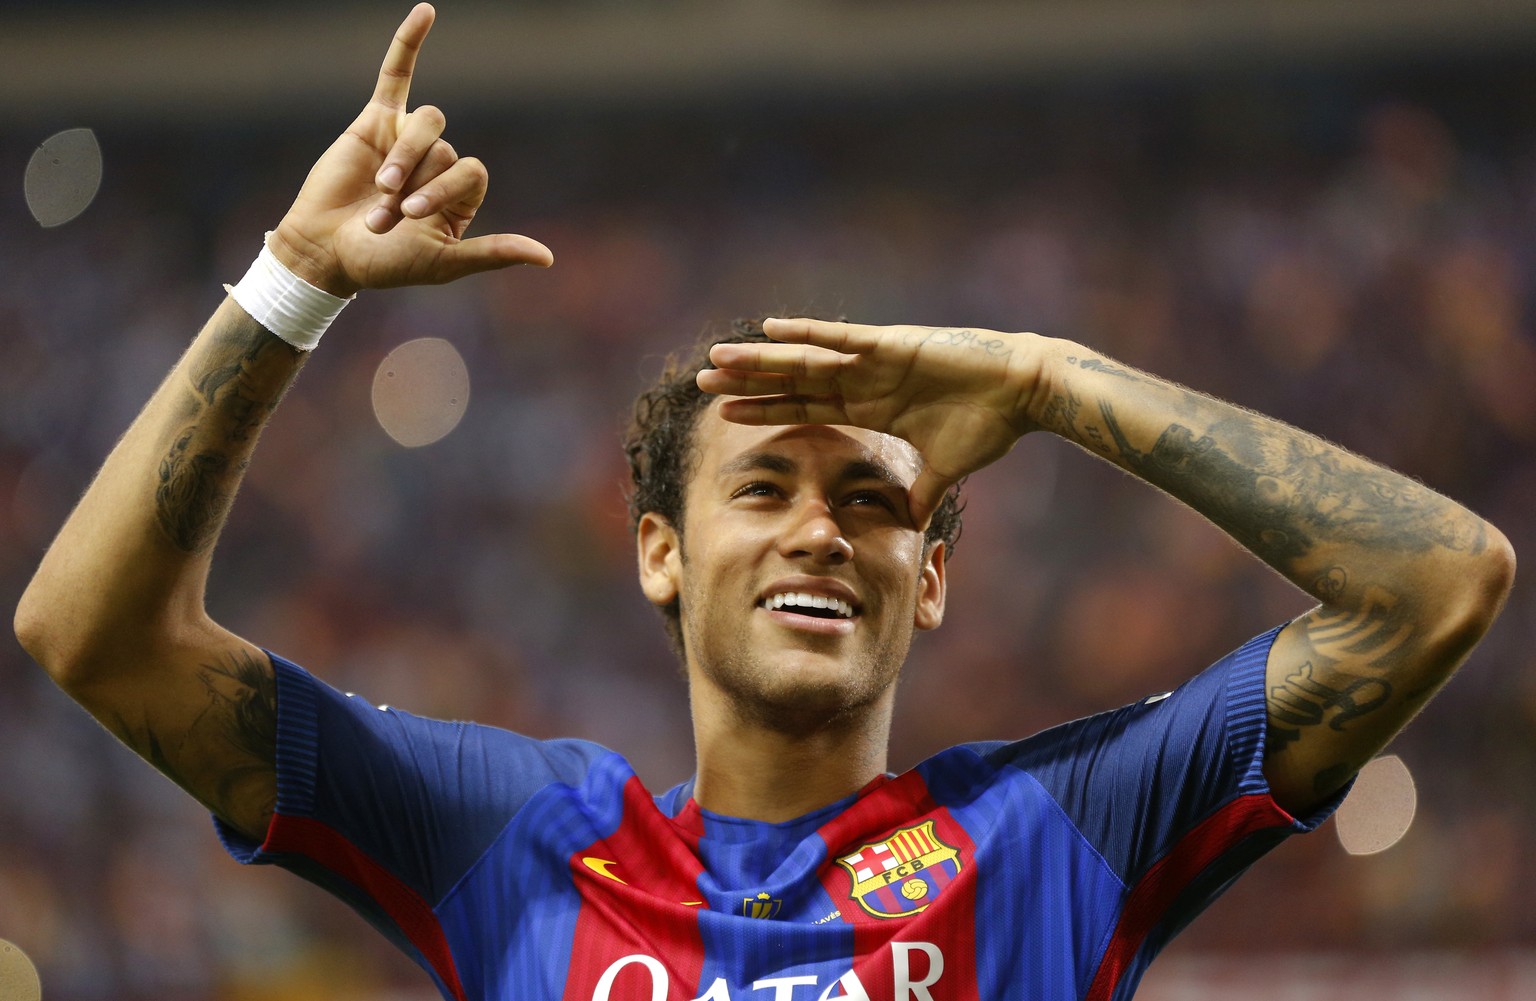 Neymar schaut einer finanziell rosigen Zukunft entgegen.